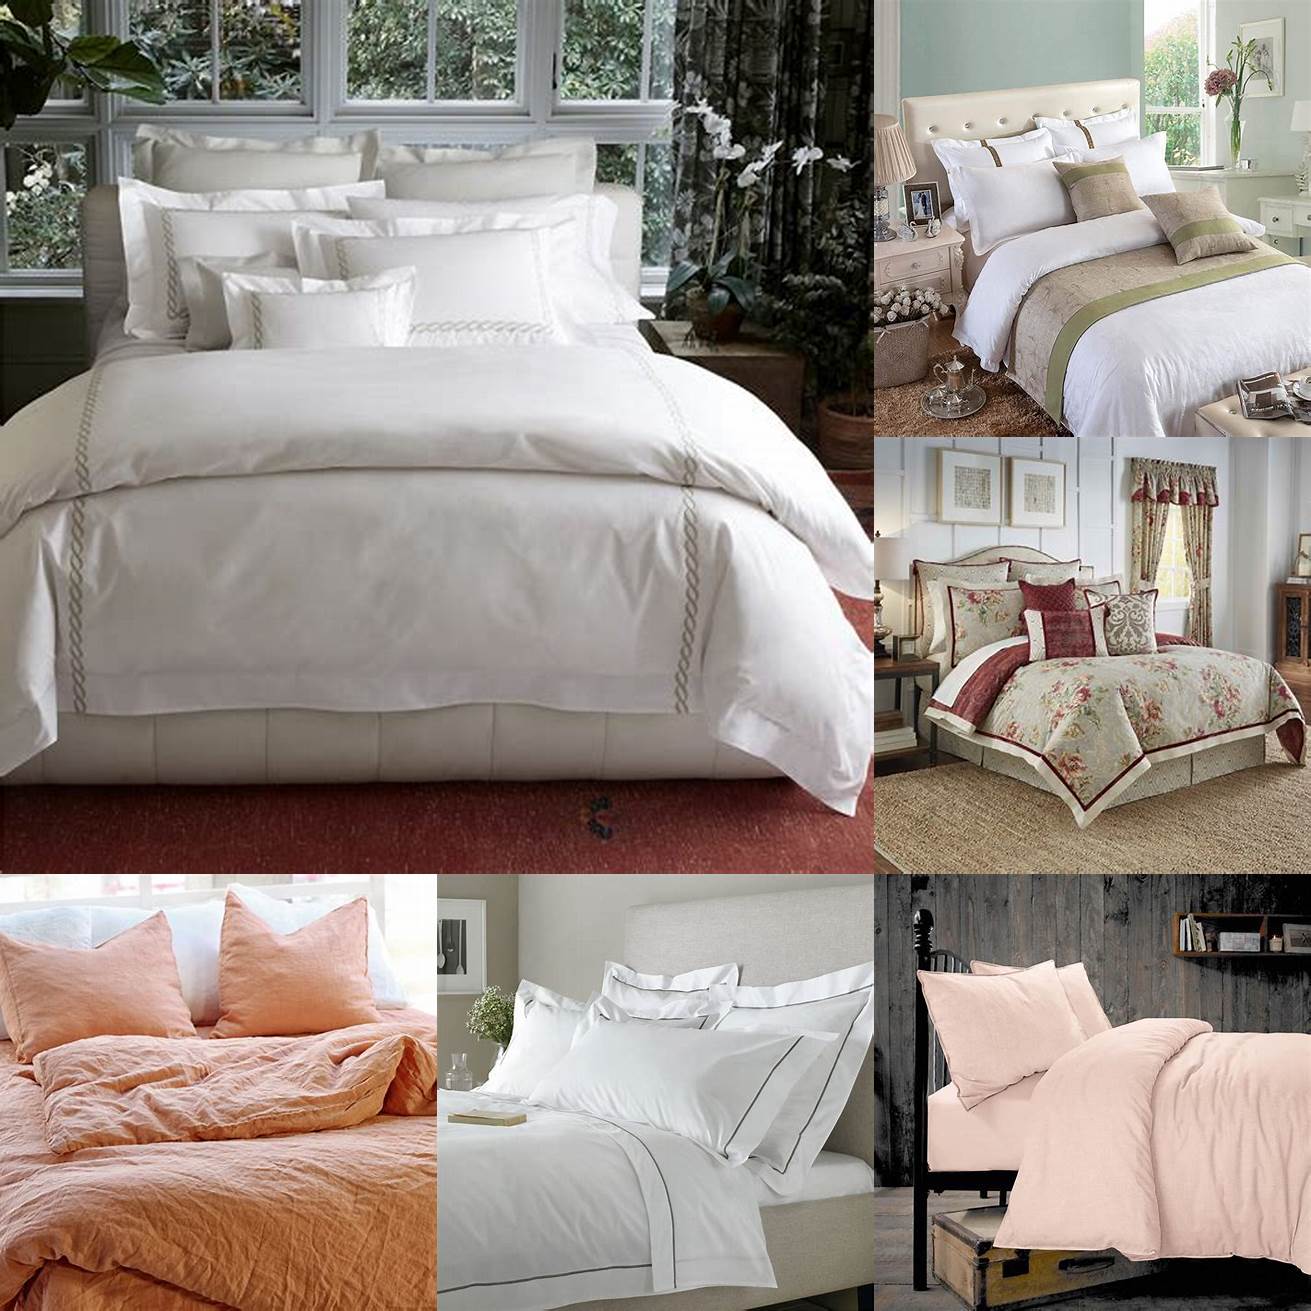 Image of linen bedding